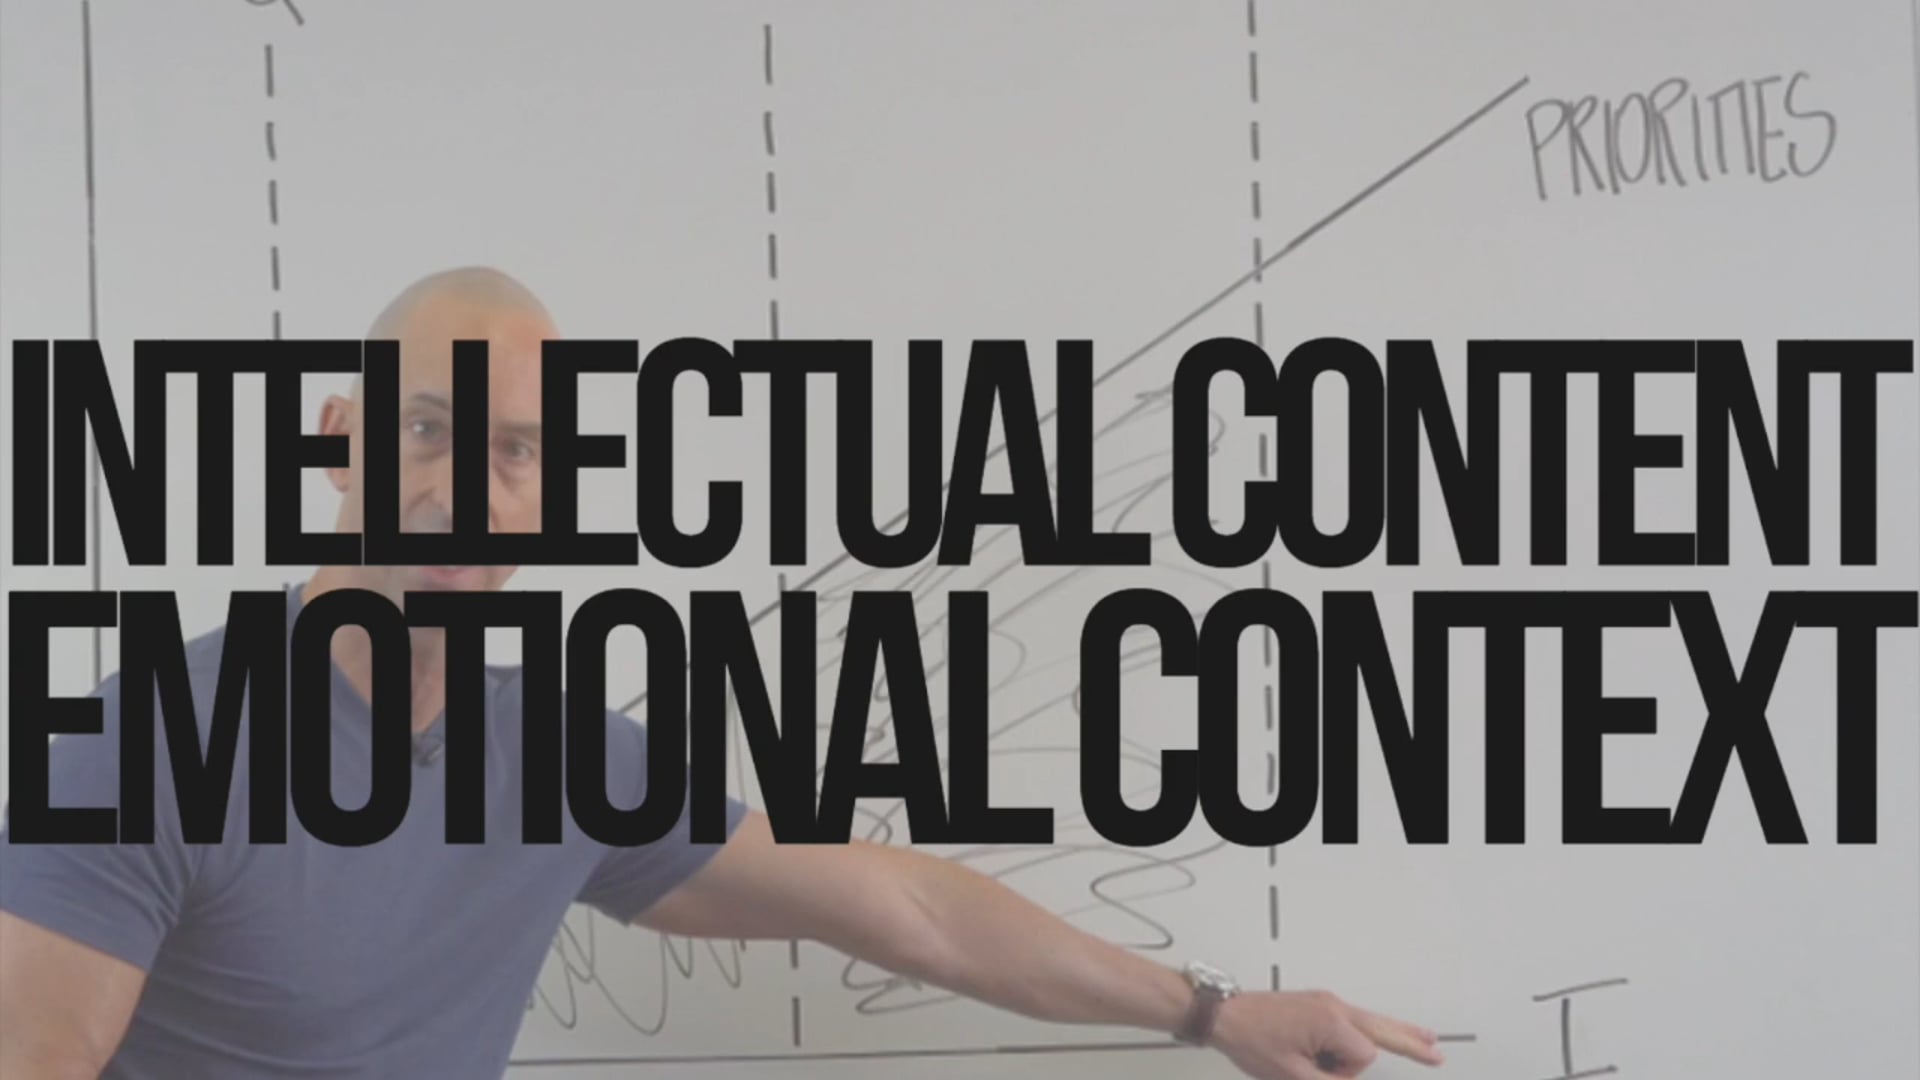 Intellectual Content Emotional Context